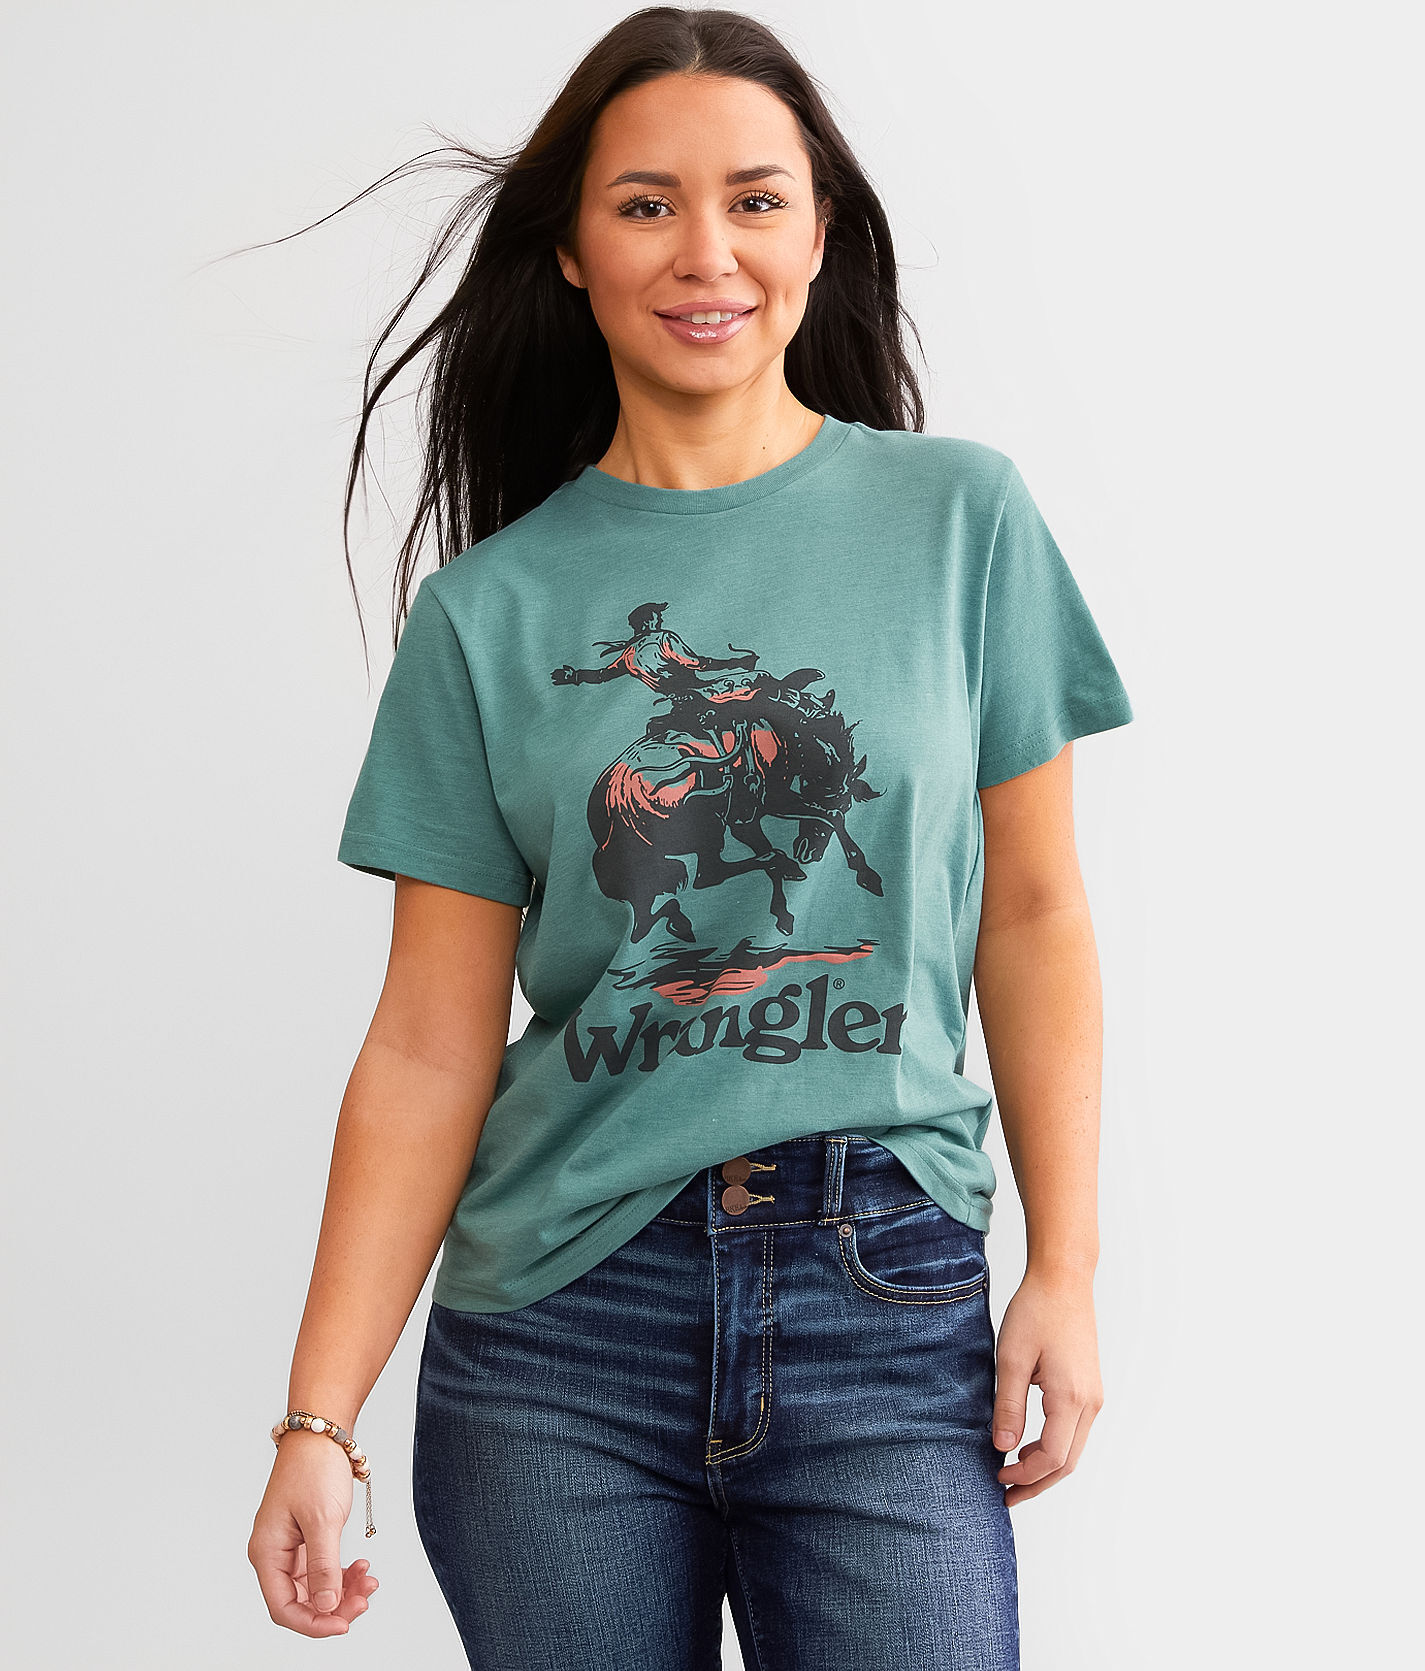 Wrangler Retro Horse Rider T-Shirt  - Green - female - Size: Medium